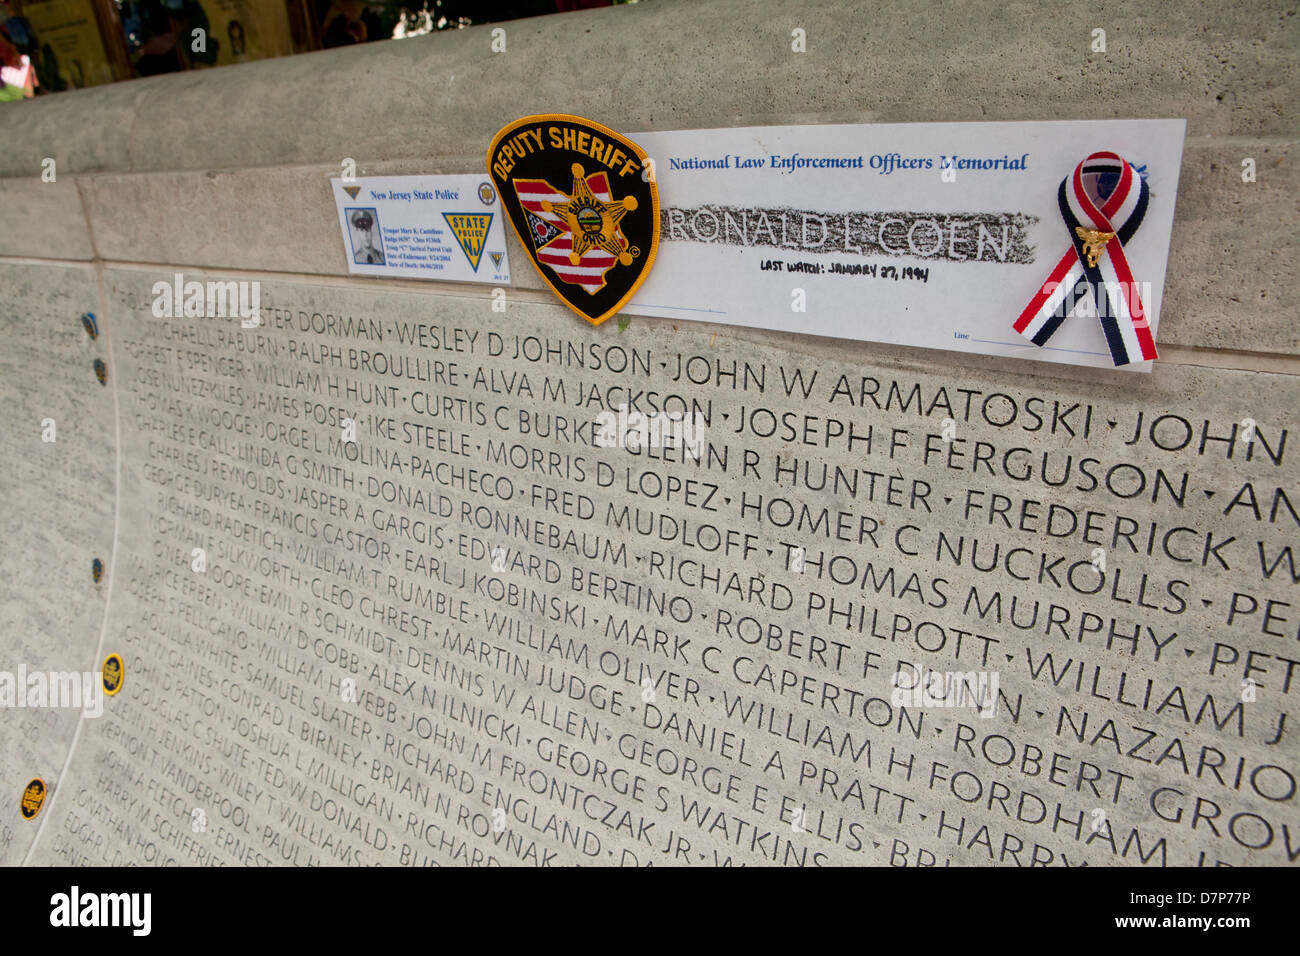 National Police Officers Memorial wall - Washington, DC USA Stock Photo